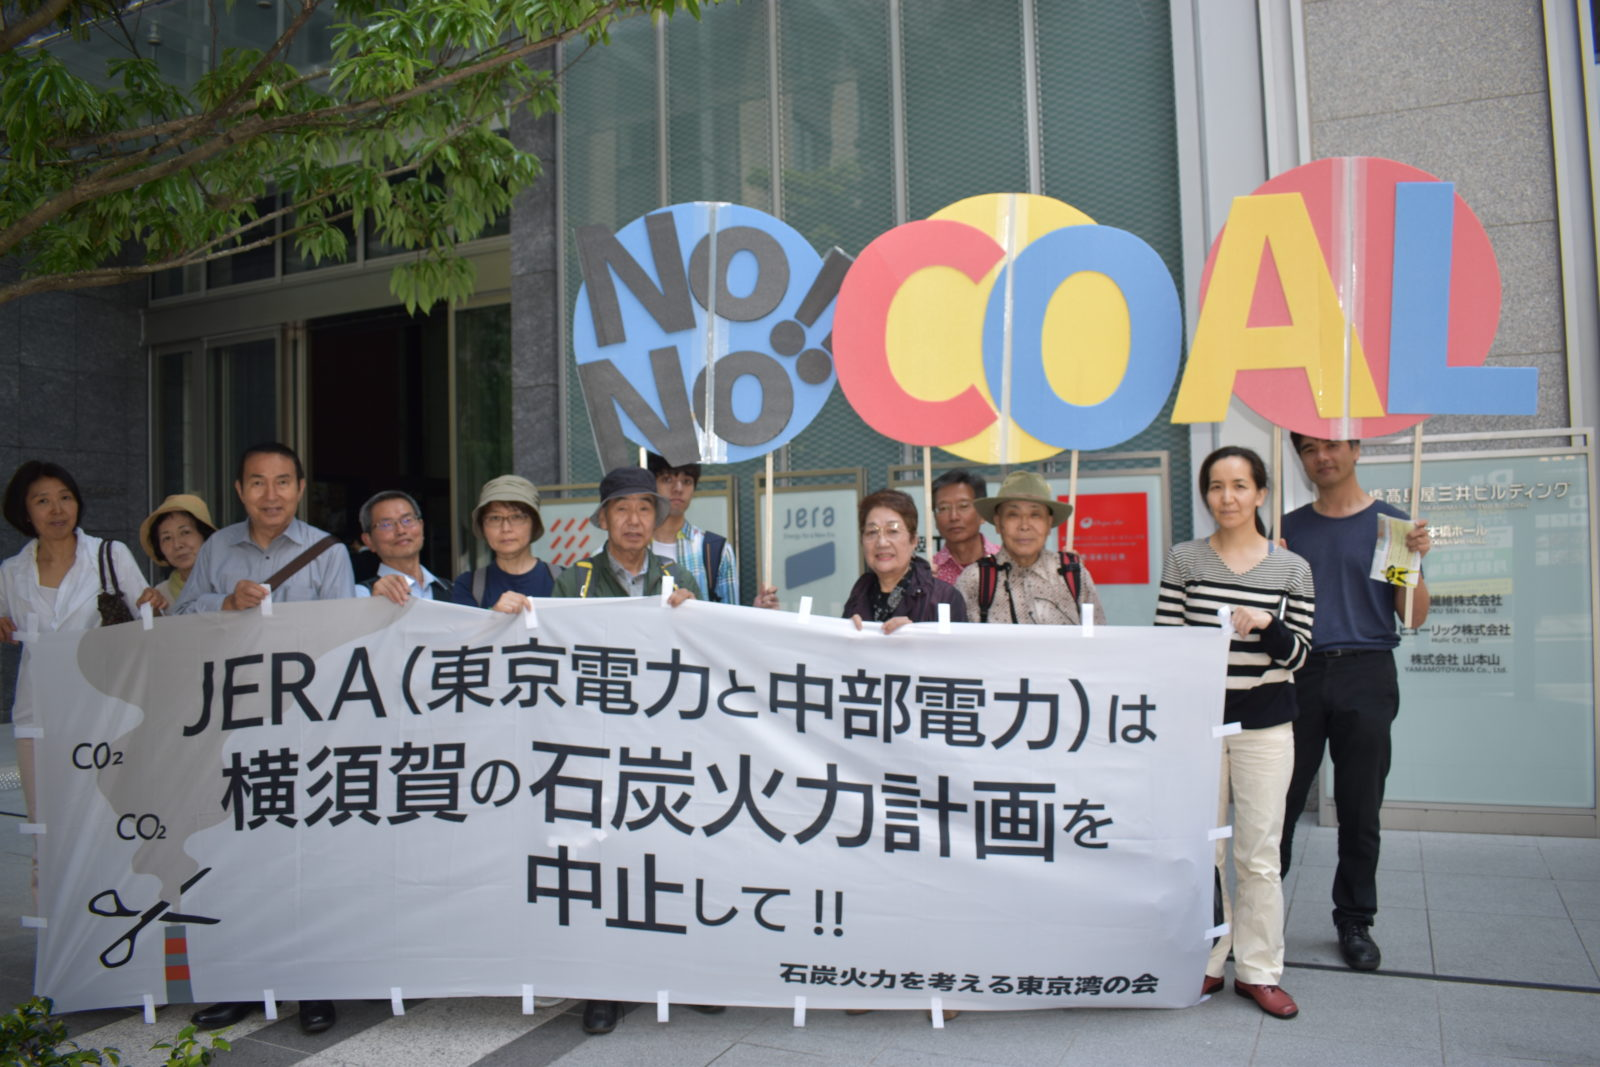 Kiko Network action against JERA's planned coal-fired facilities in Yokosuka, Japan